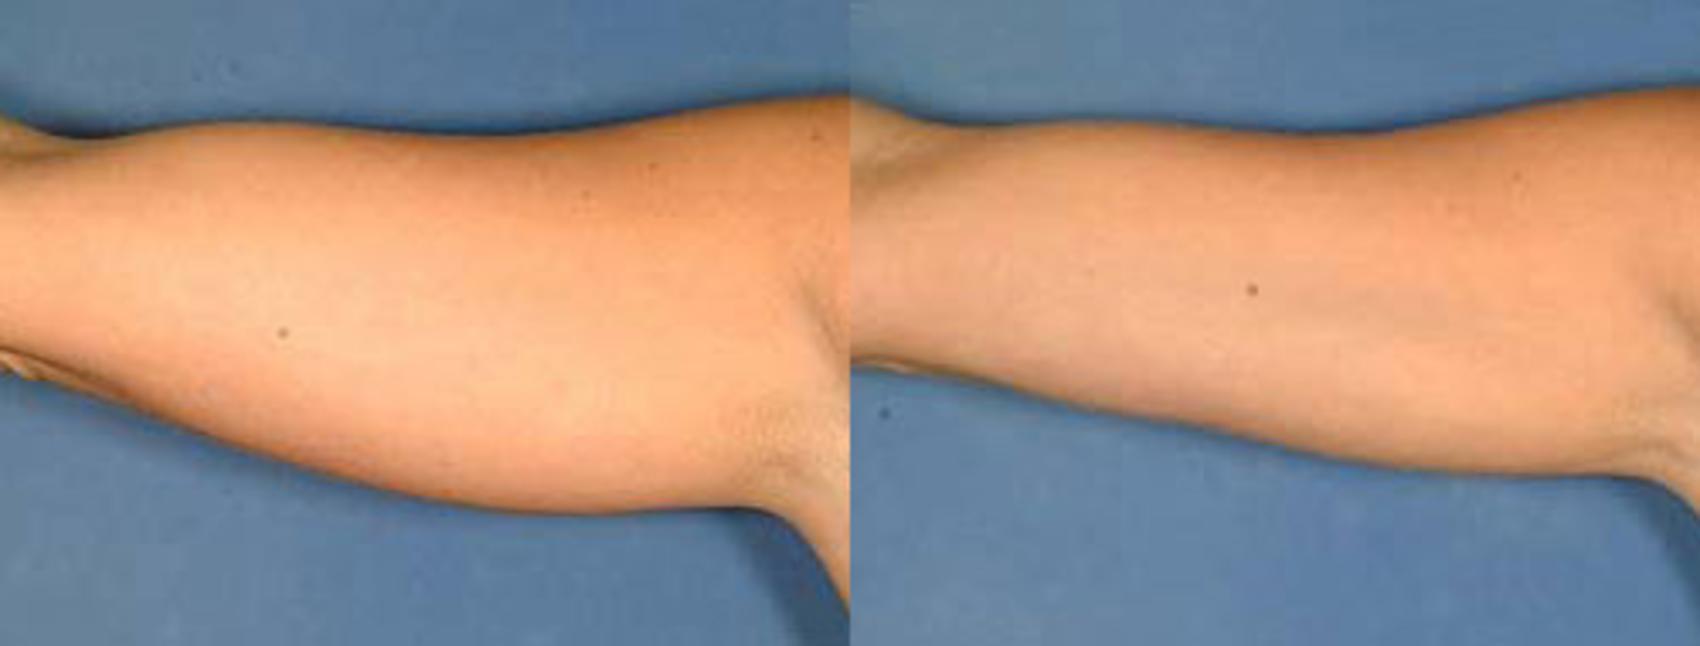 Liposuction for Women Case 136 Before & After View #1 | Louisville, KY | CaloSpa® Rejuvenation Center